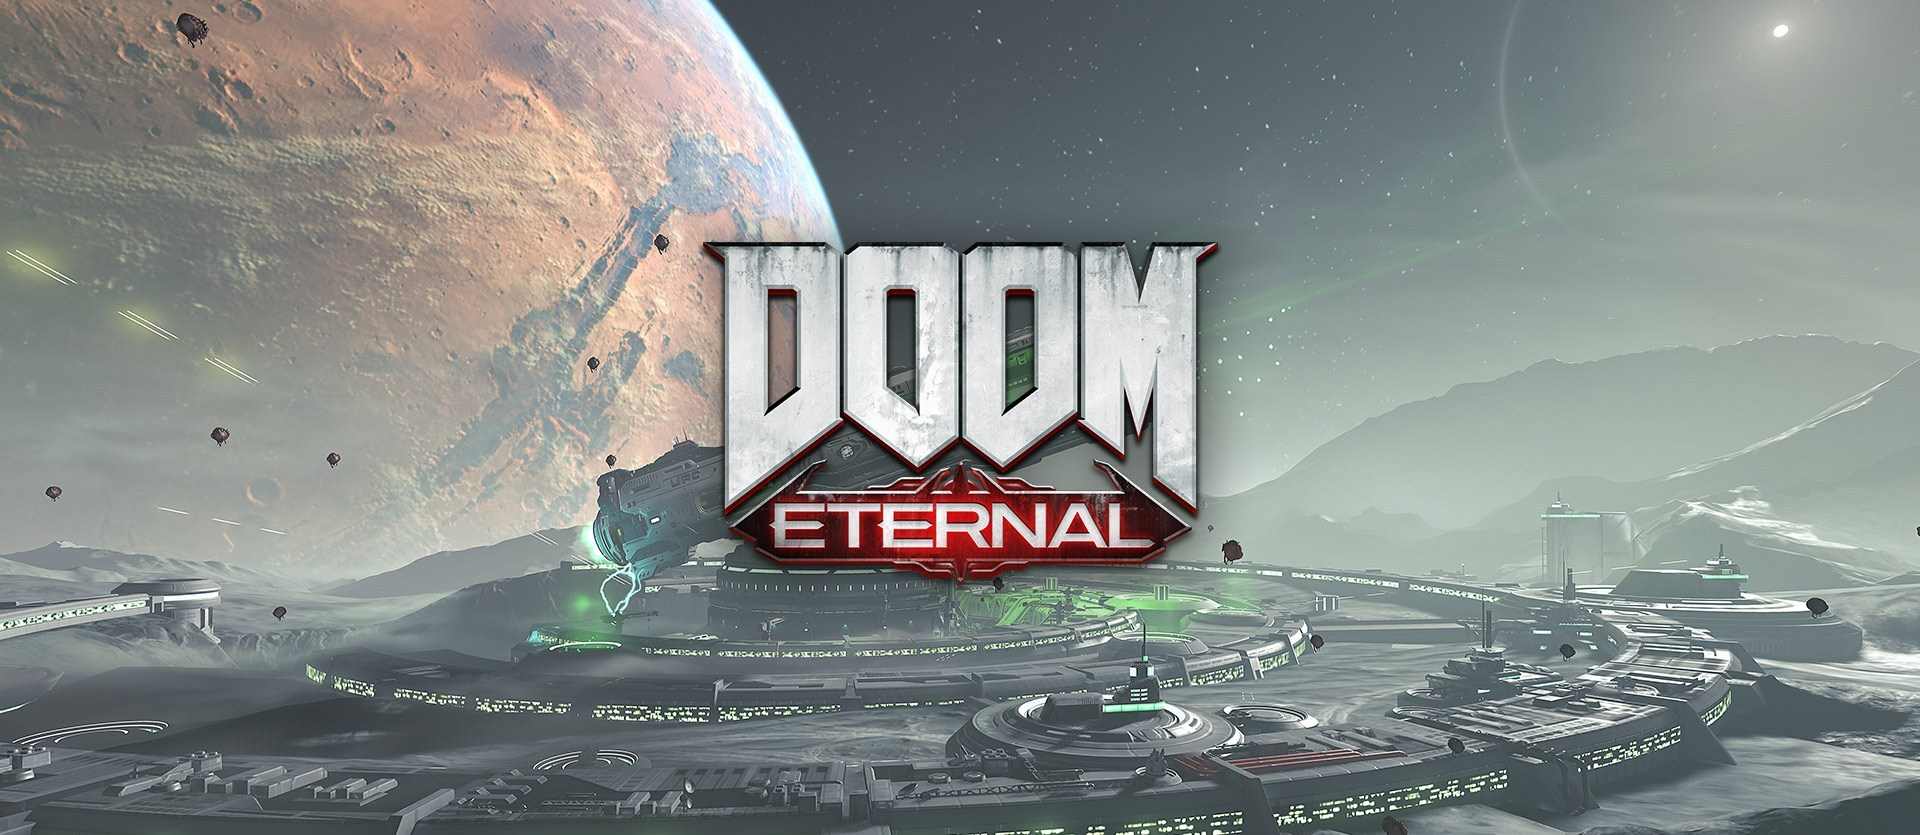 DOOM-Eternal-logo